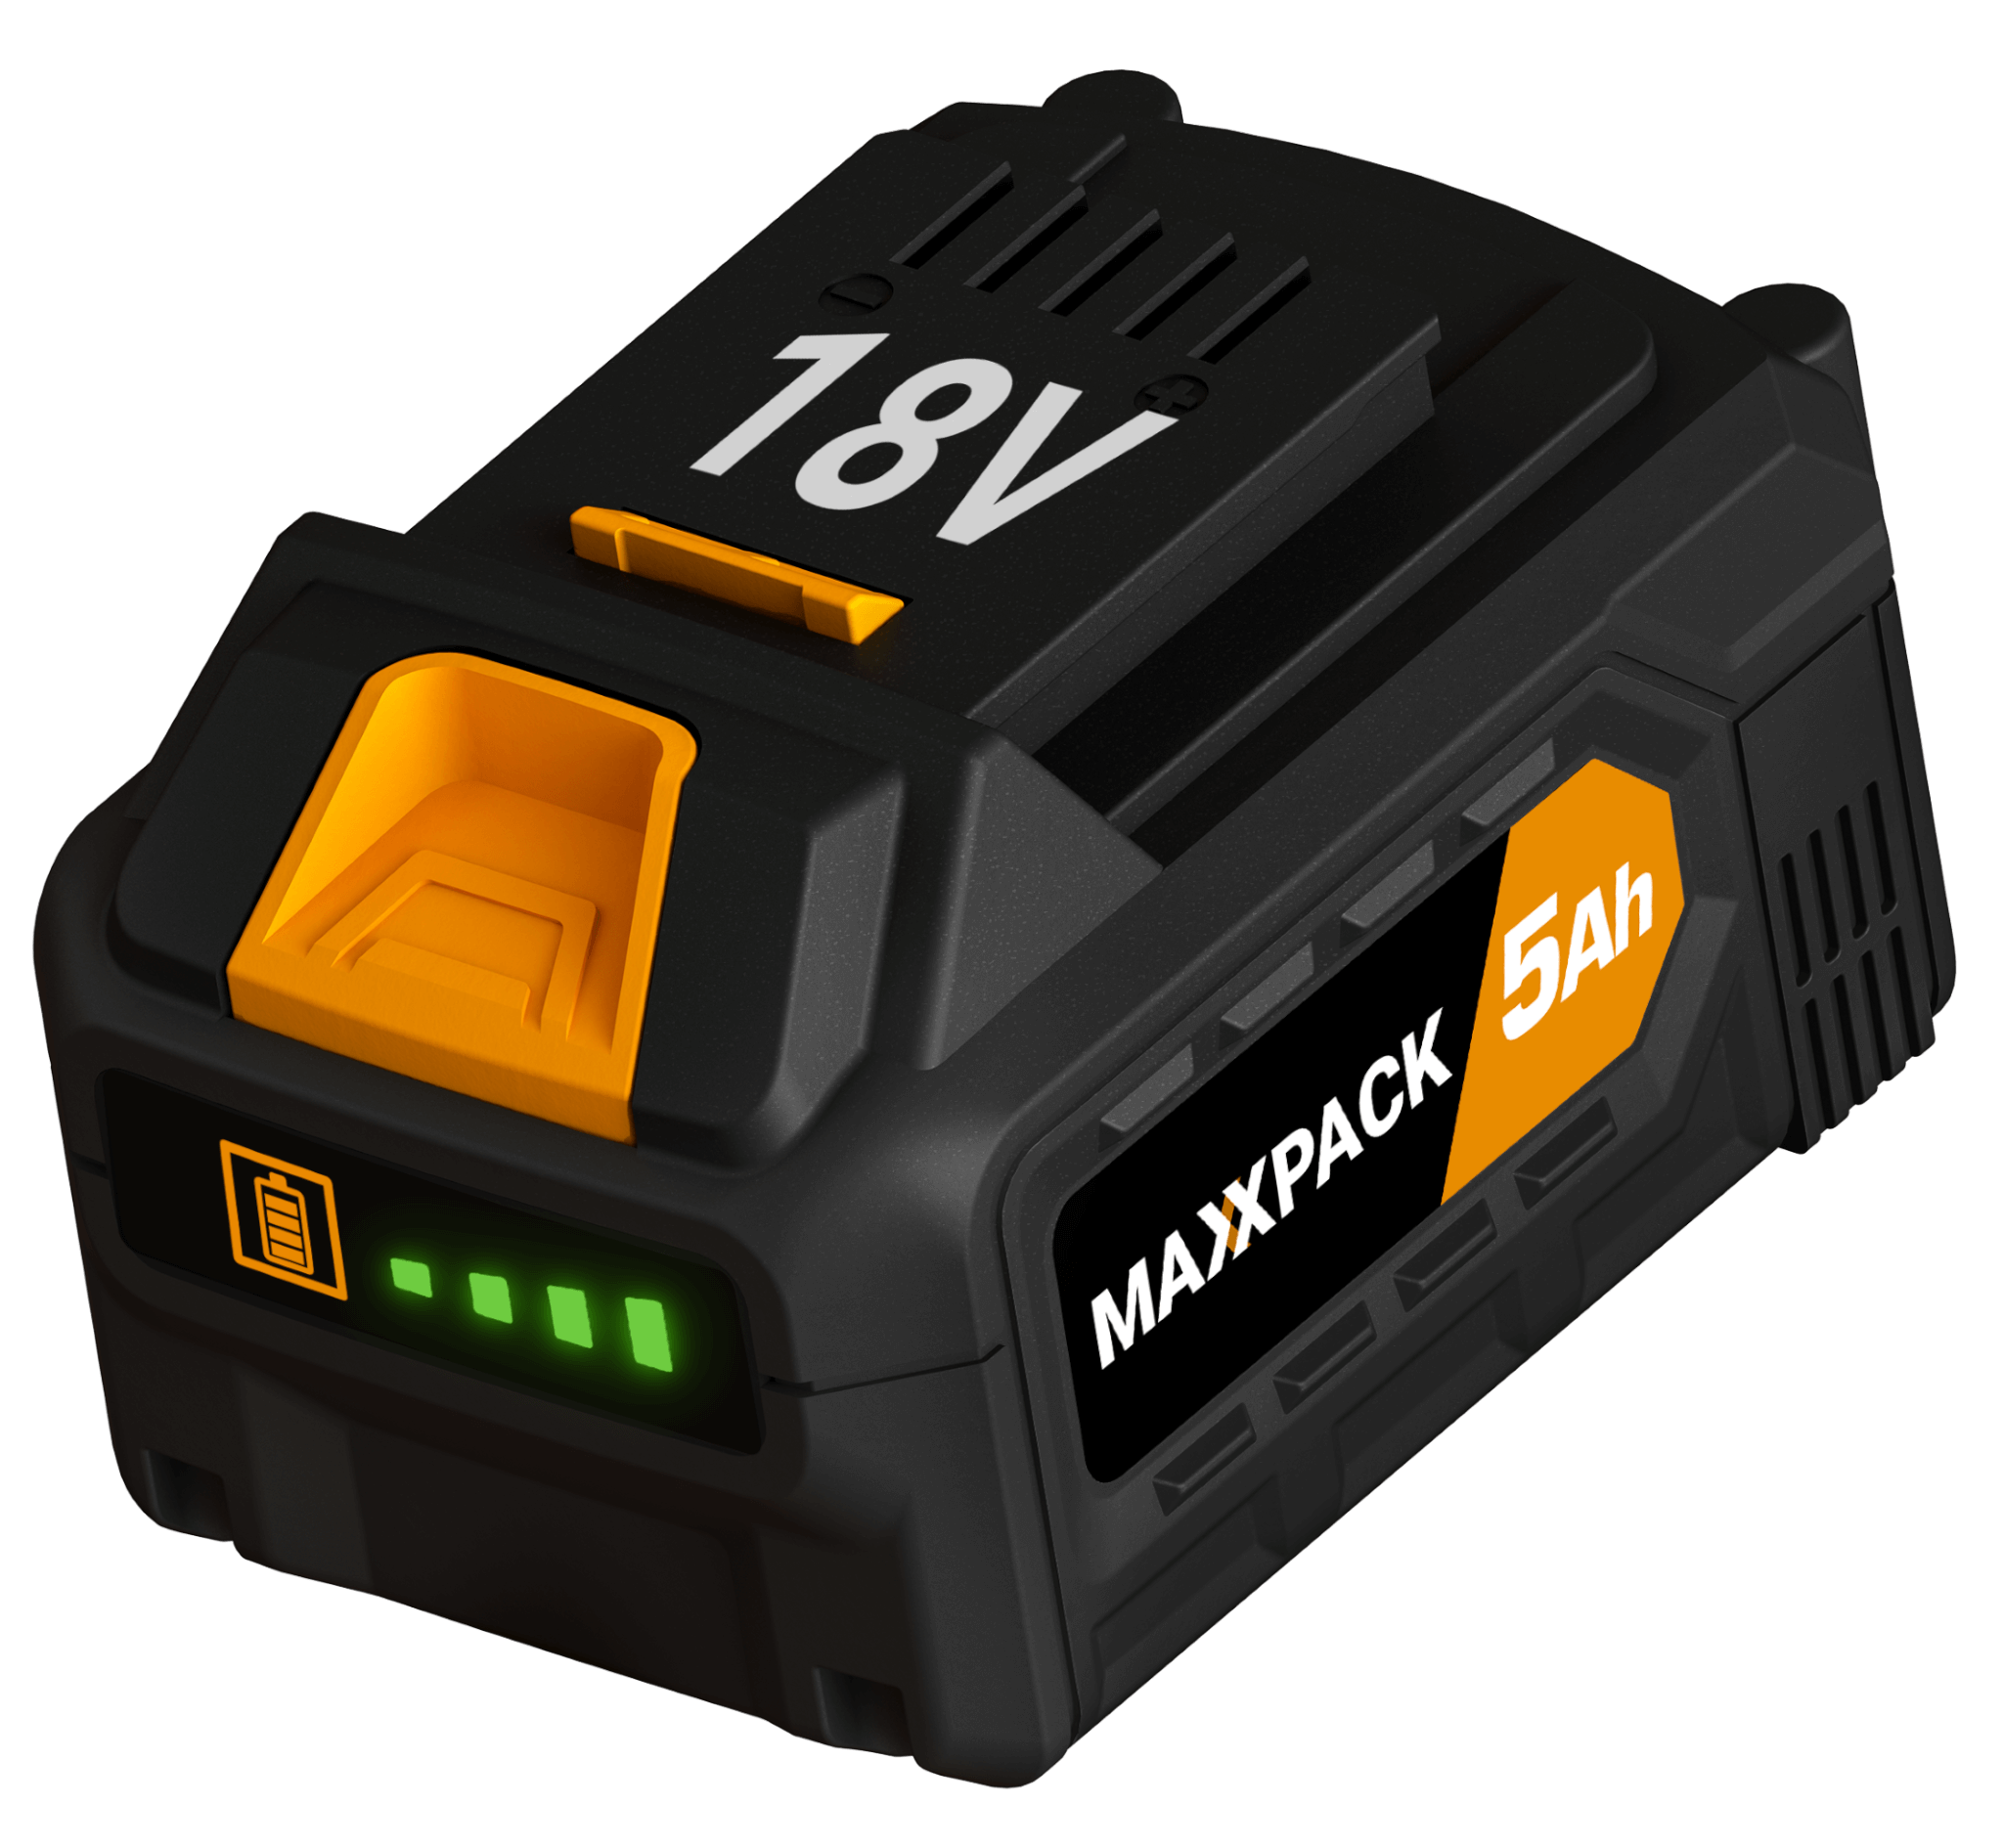 5.0Ah Battery | Maxxpack collection | Batavia